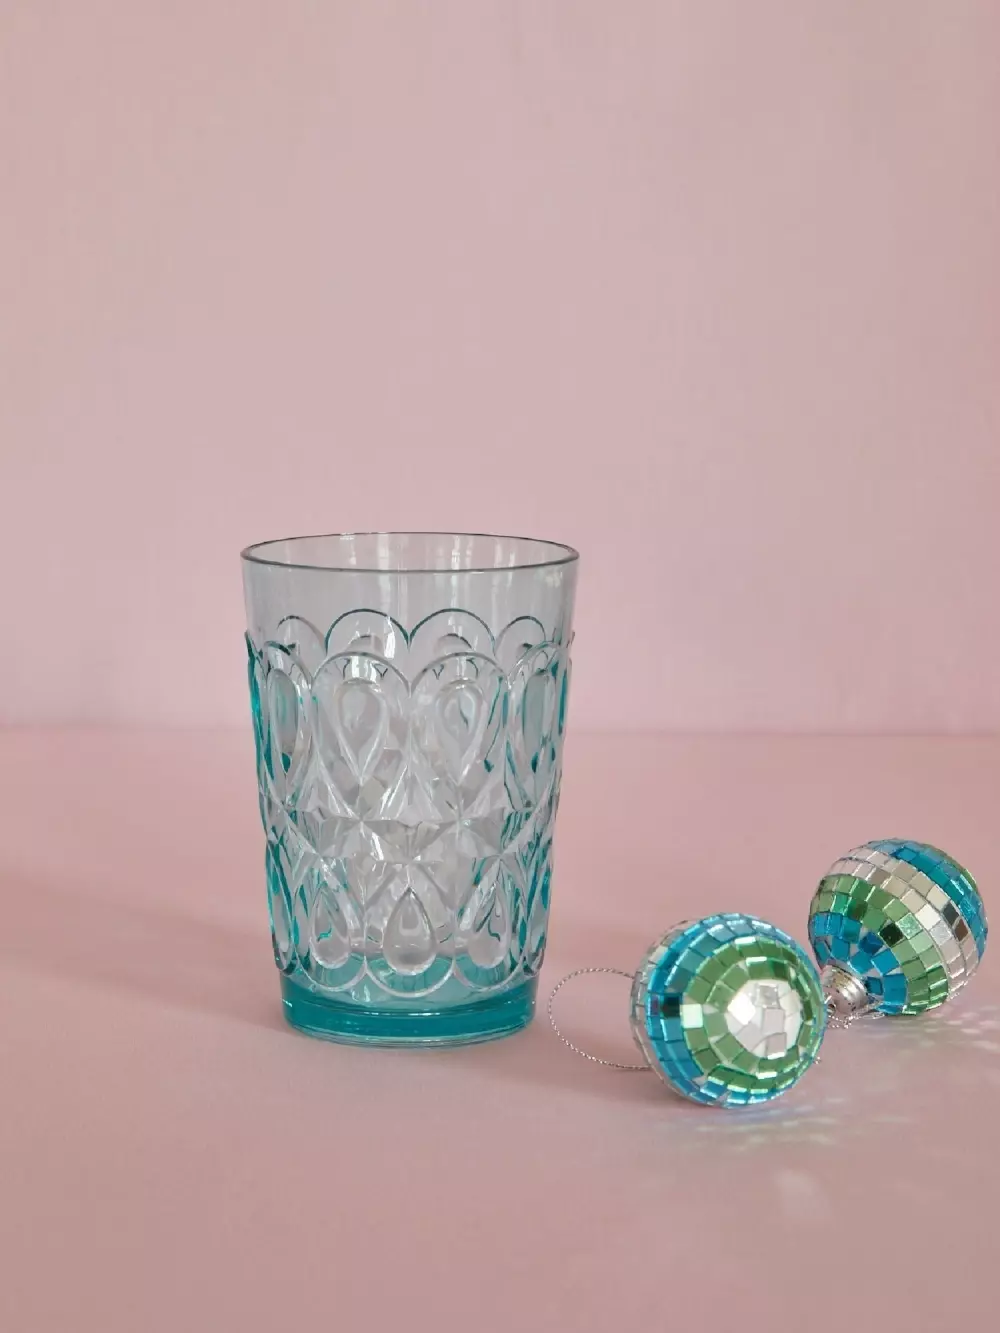 Glass Akryl Mint, 5708315103991, HSGLC-SWMI, Kjøkken, Glass, Rice, Acrylic Tumbler in Mint with Swirly Embossed Detail - 500 ml